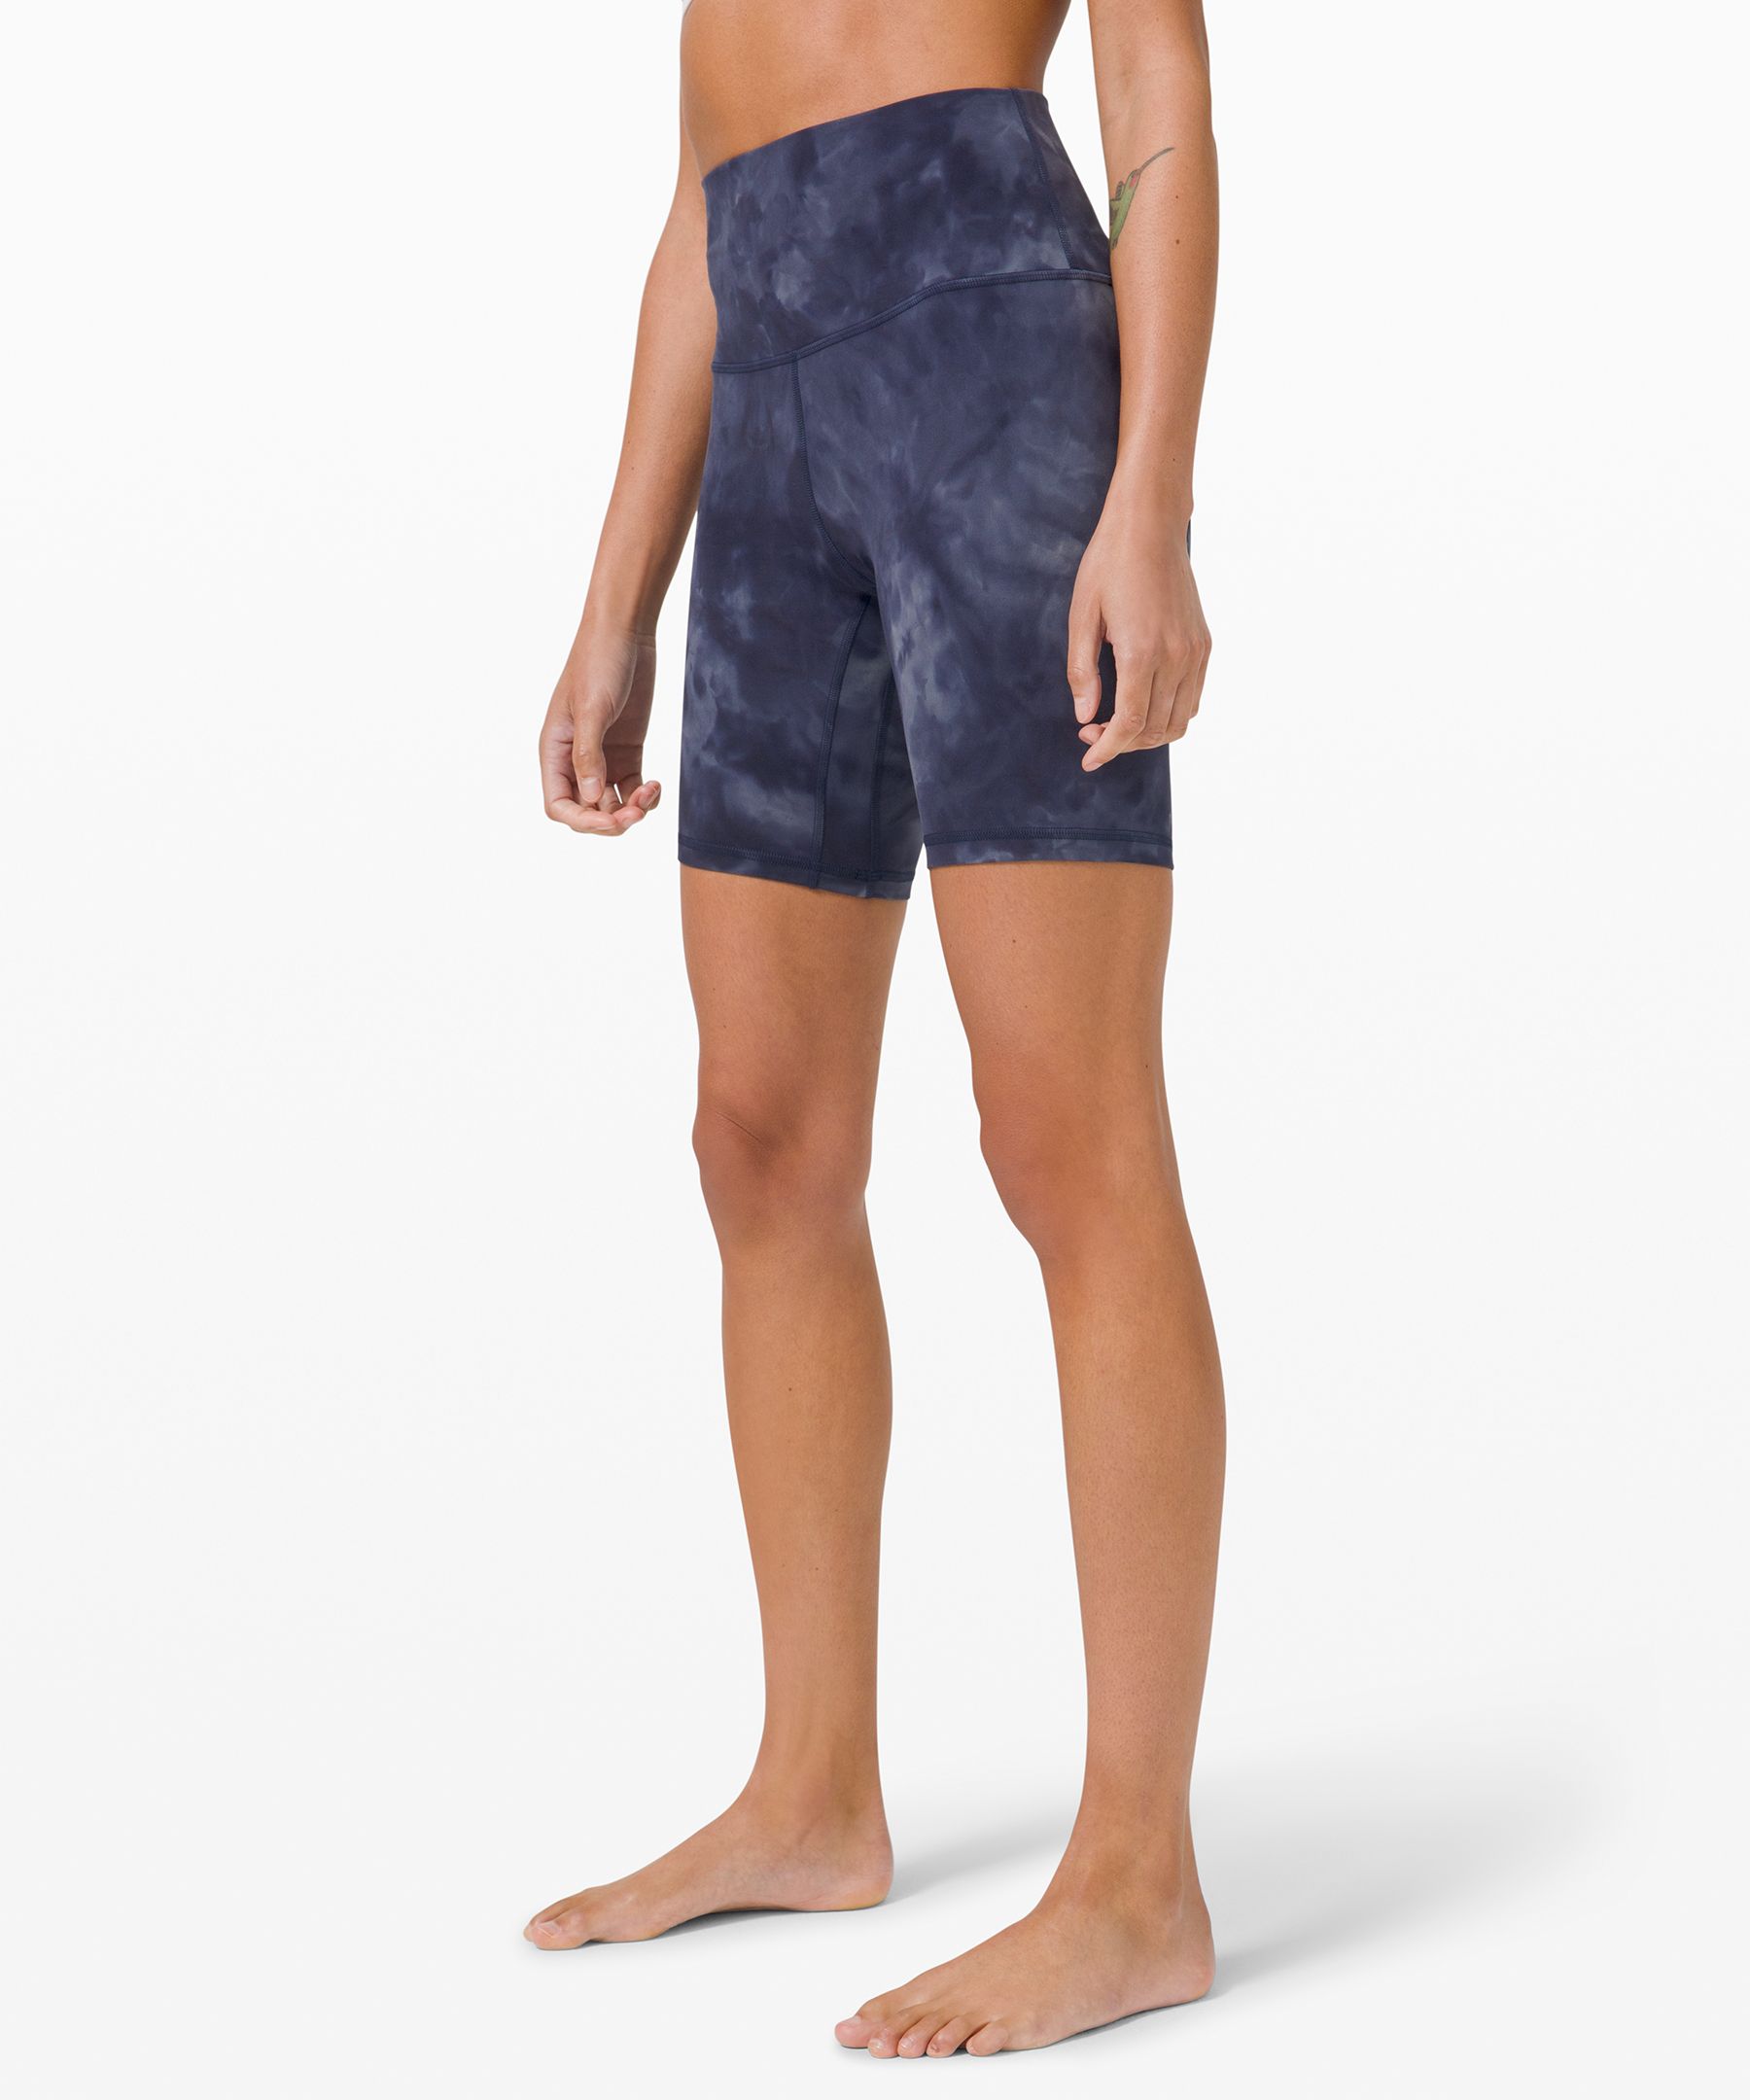 Lululemon Align™ High-rise Shorts 8" In Diamond Dye Asphalt Grey True Navy